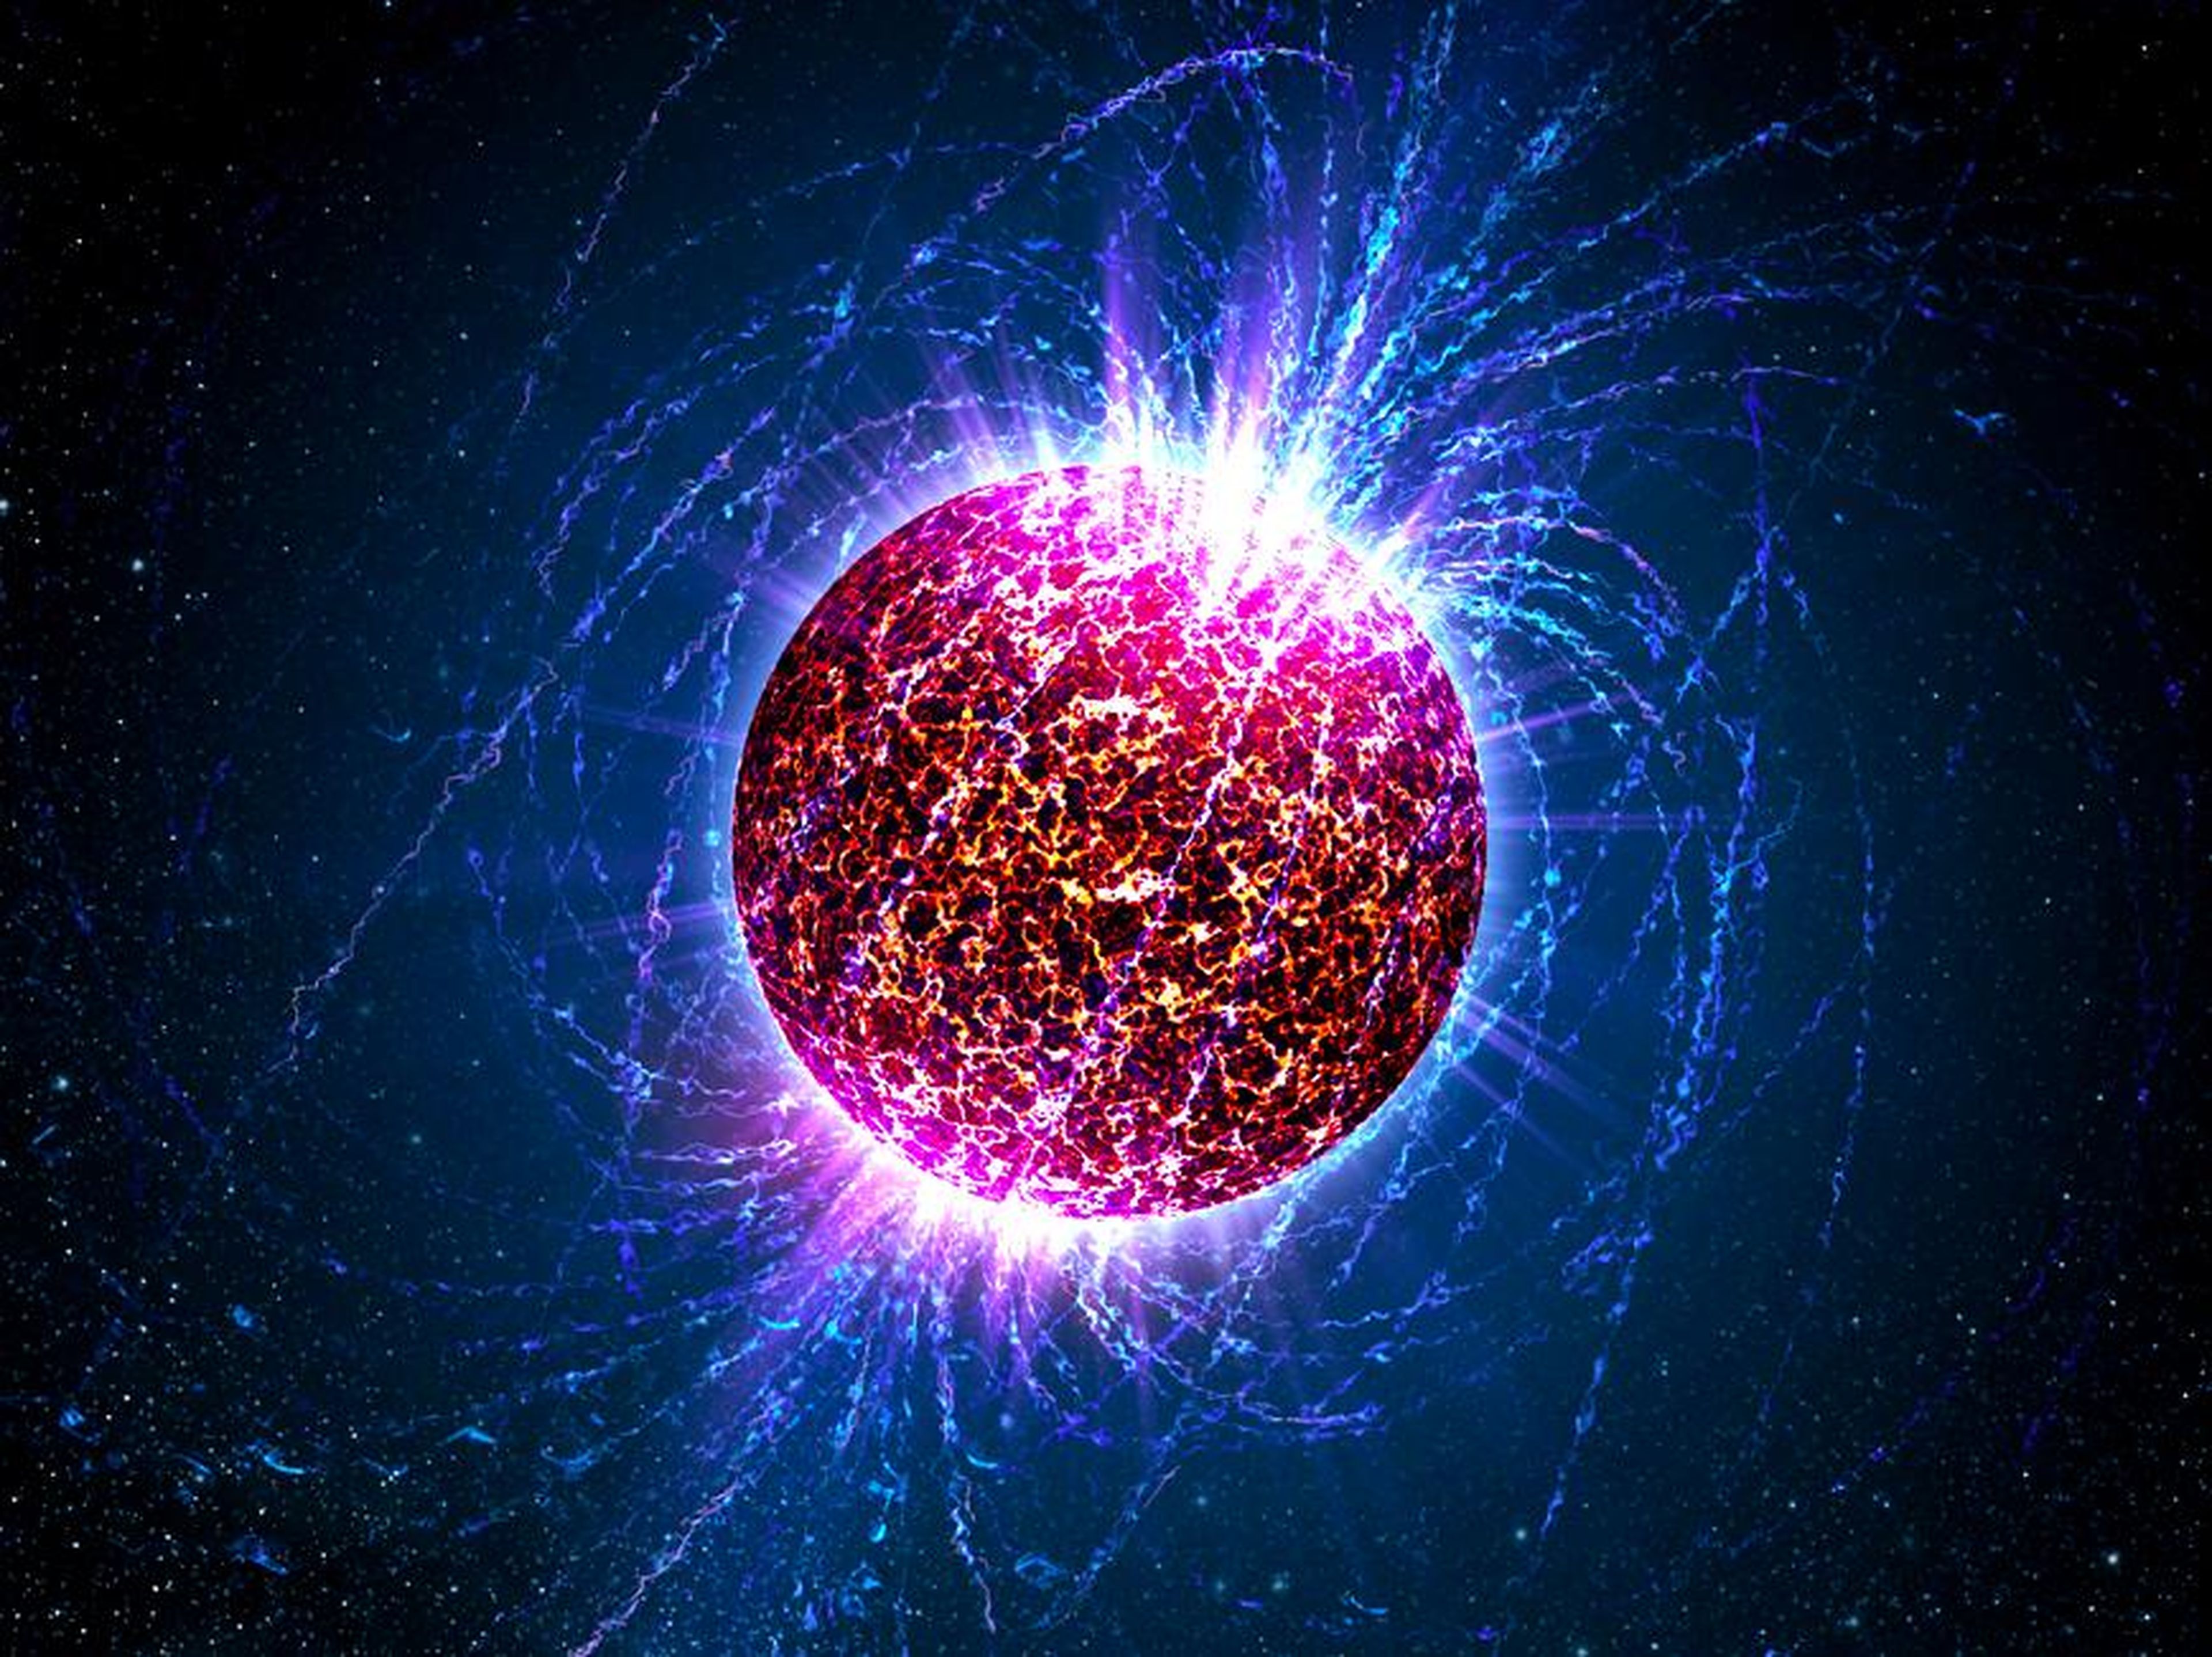 An illustration of a Neutron Star.